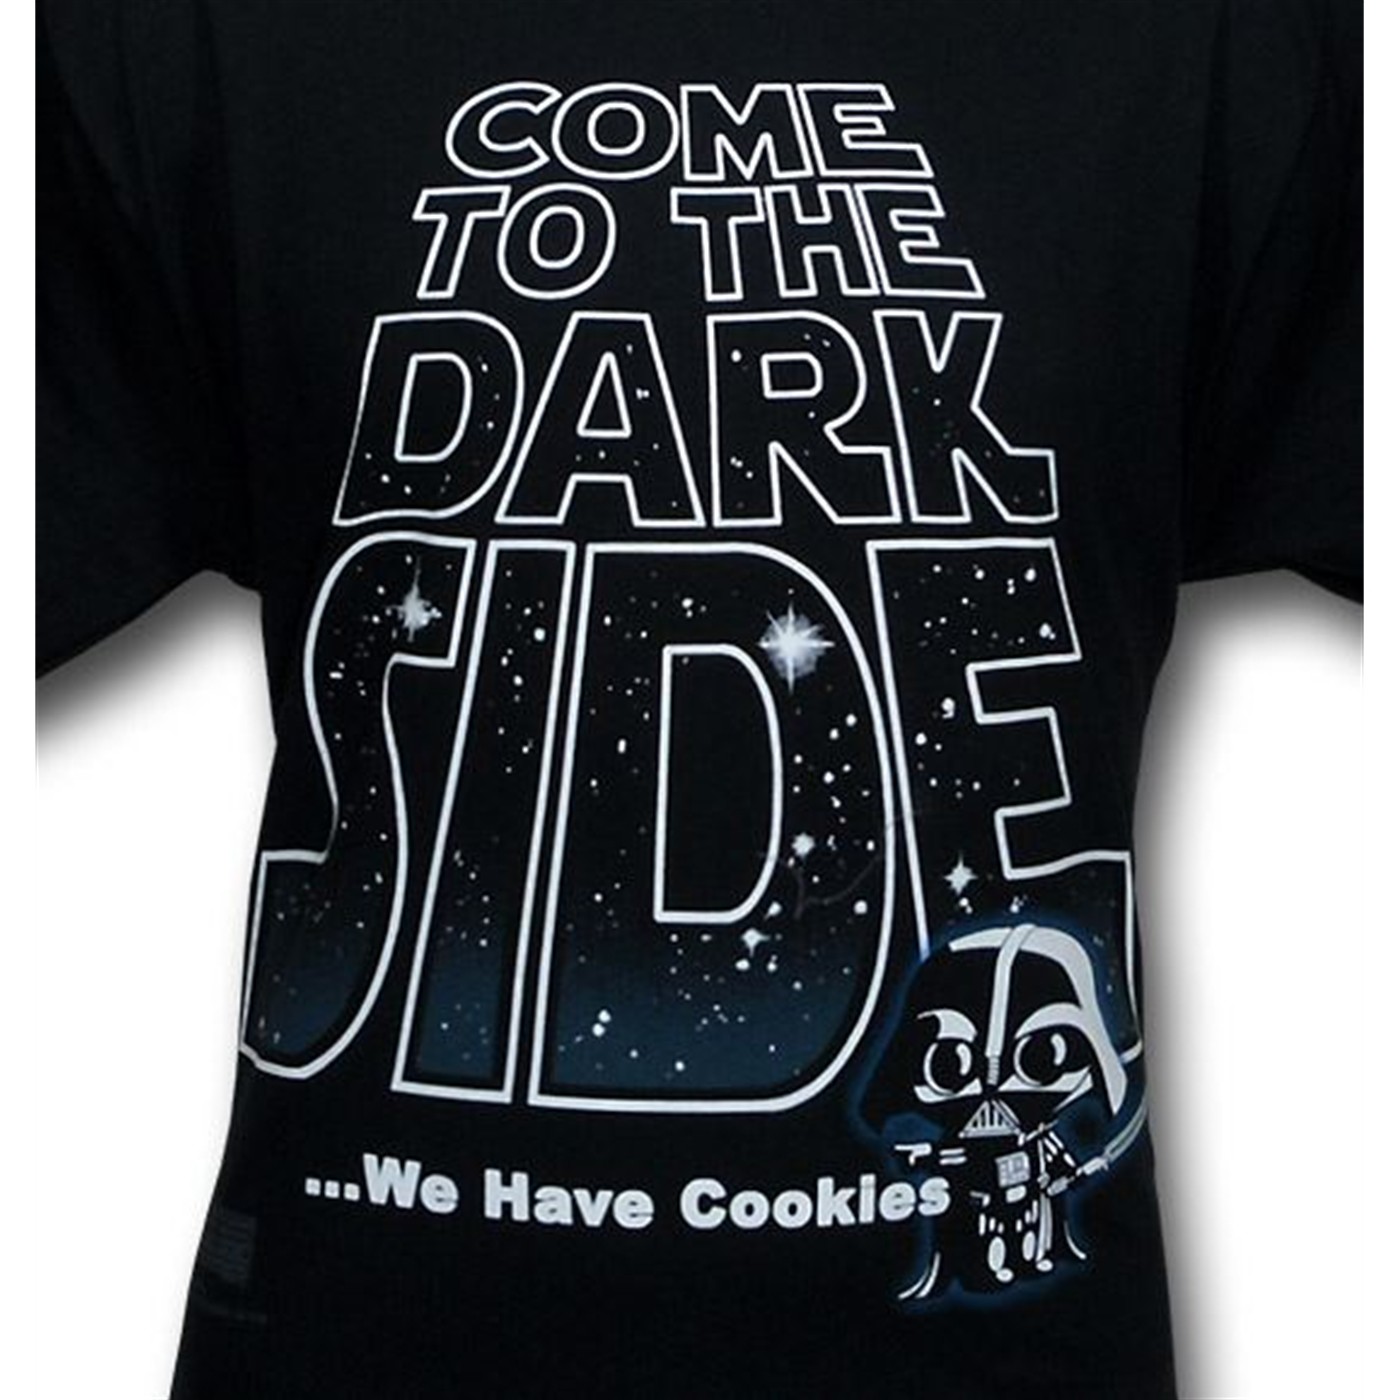 Family Guy Dark Side Cookies T-Shirt